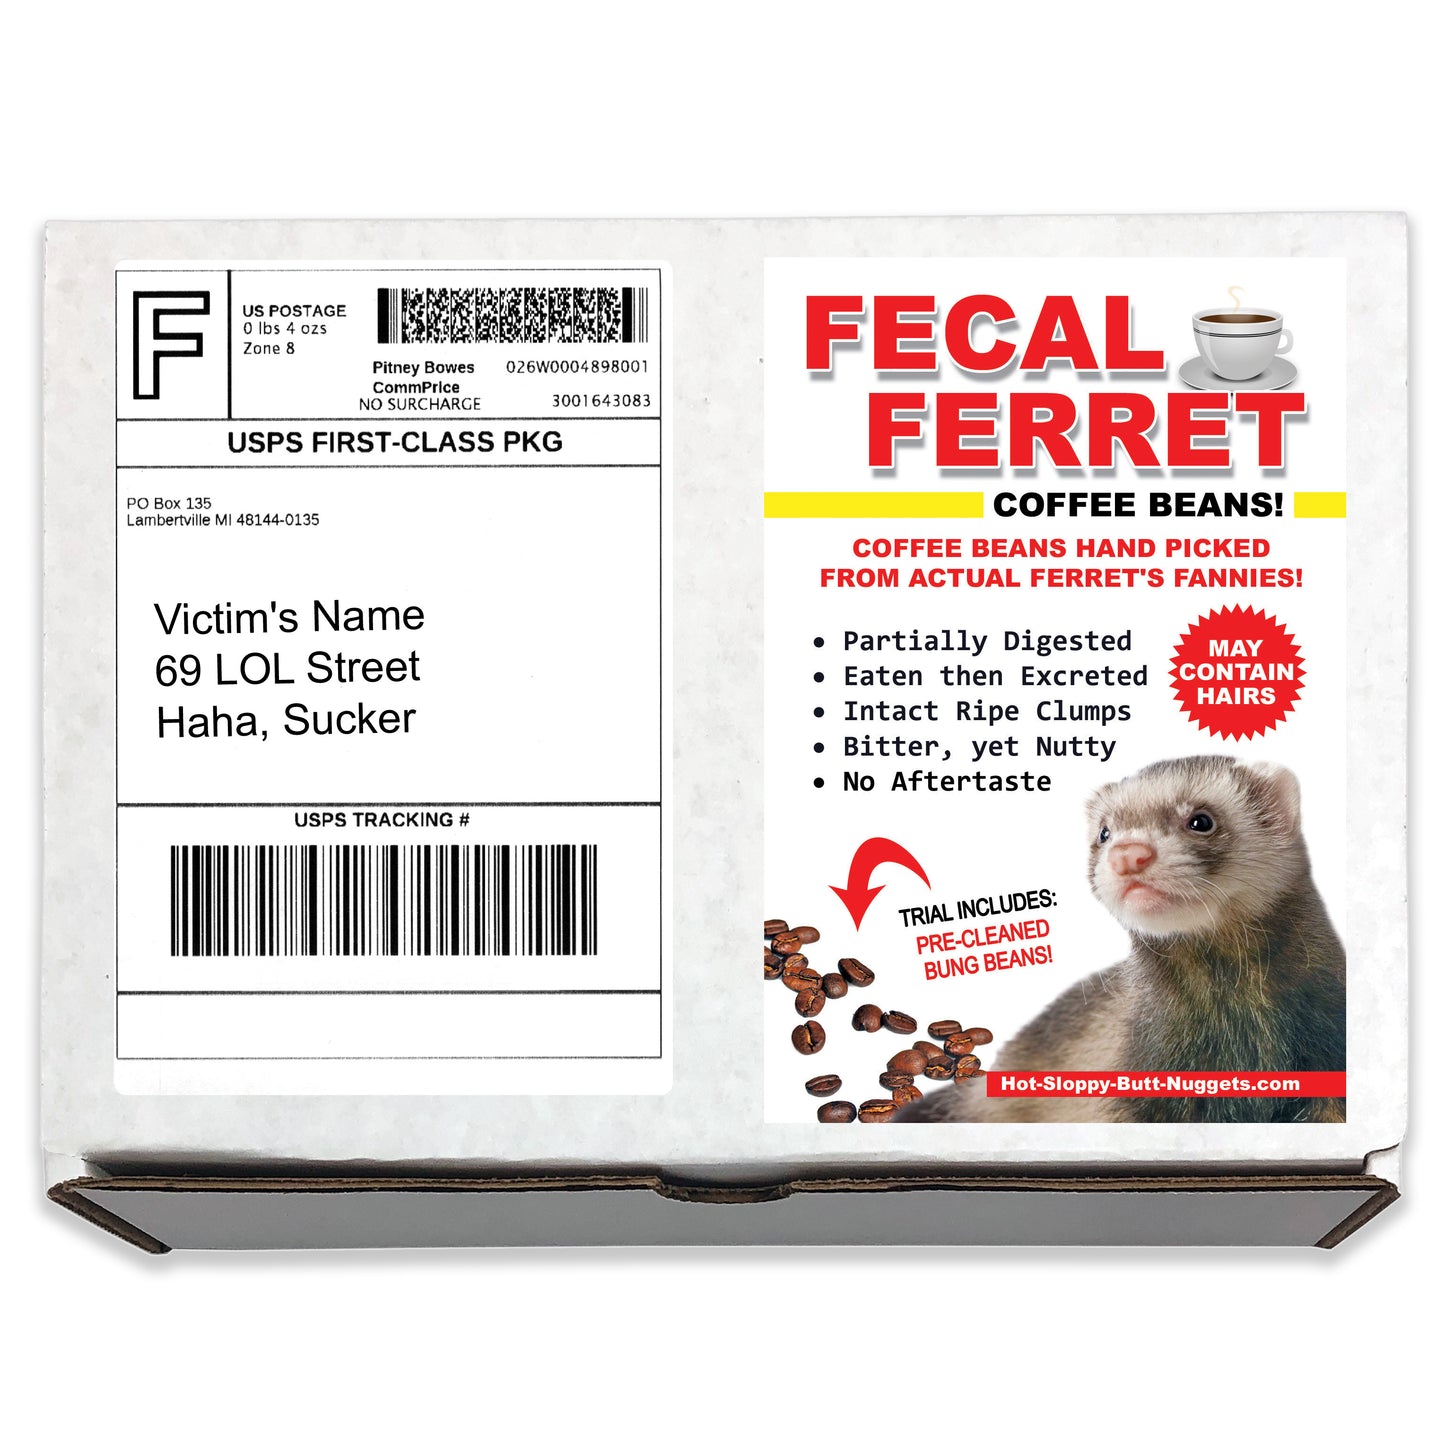 Fecal Ferret Coffee Beans Prank Box